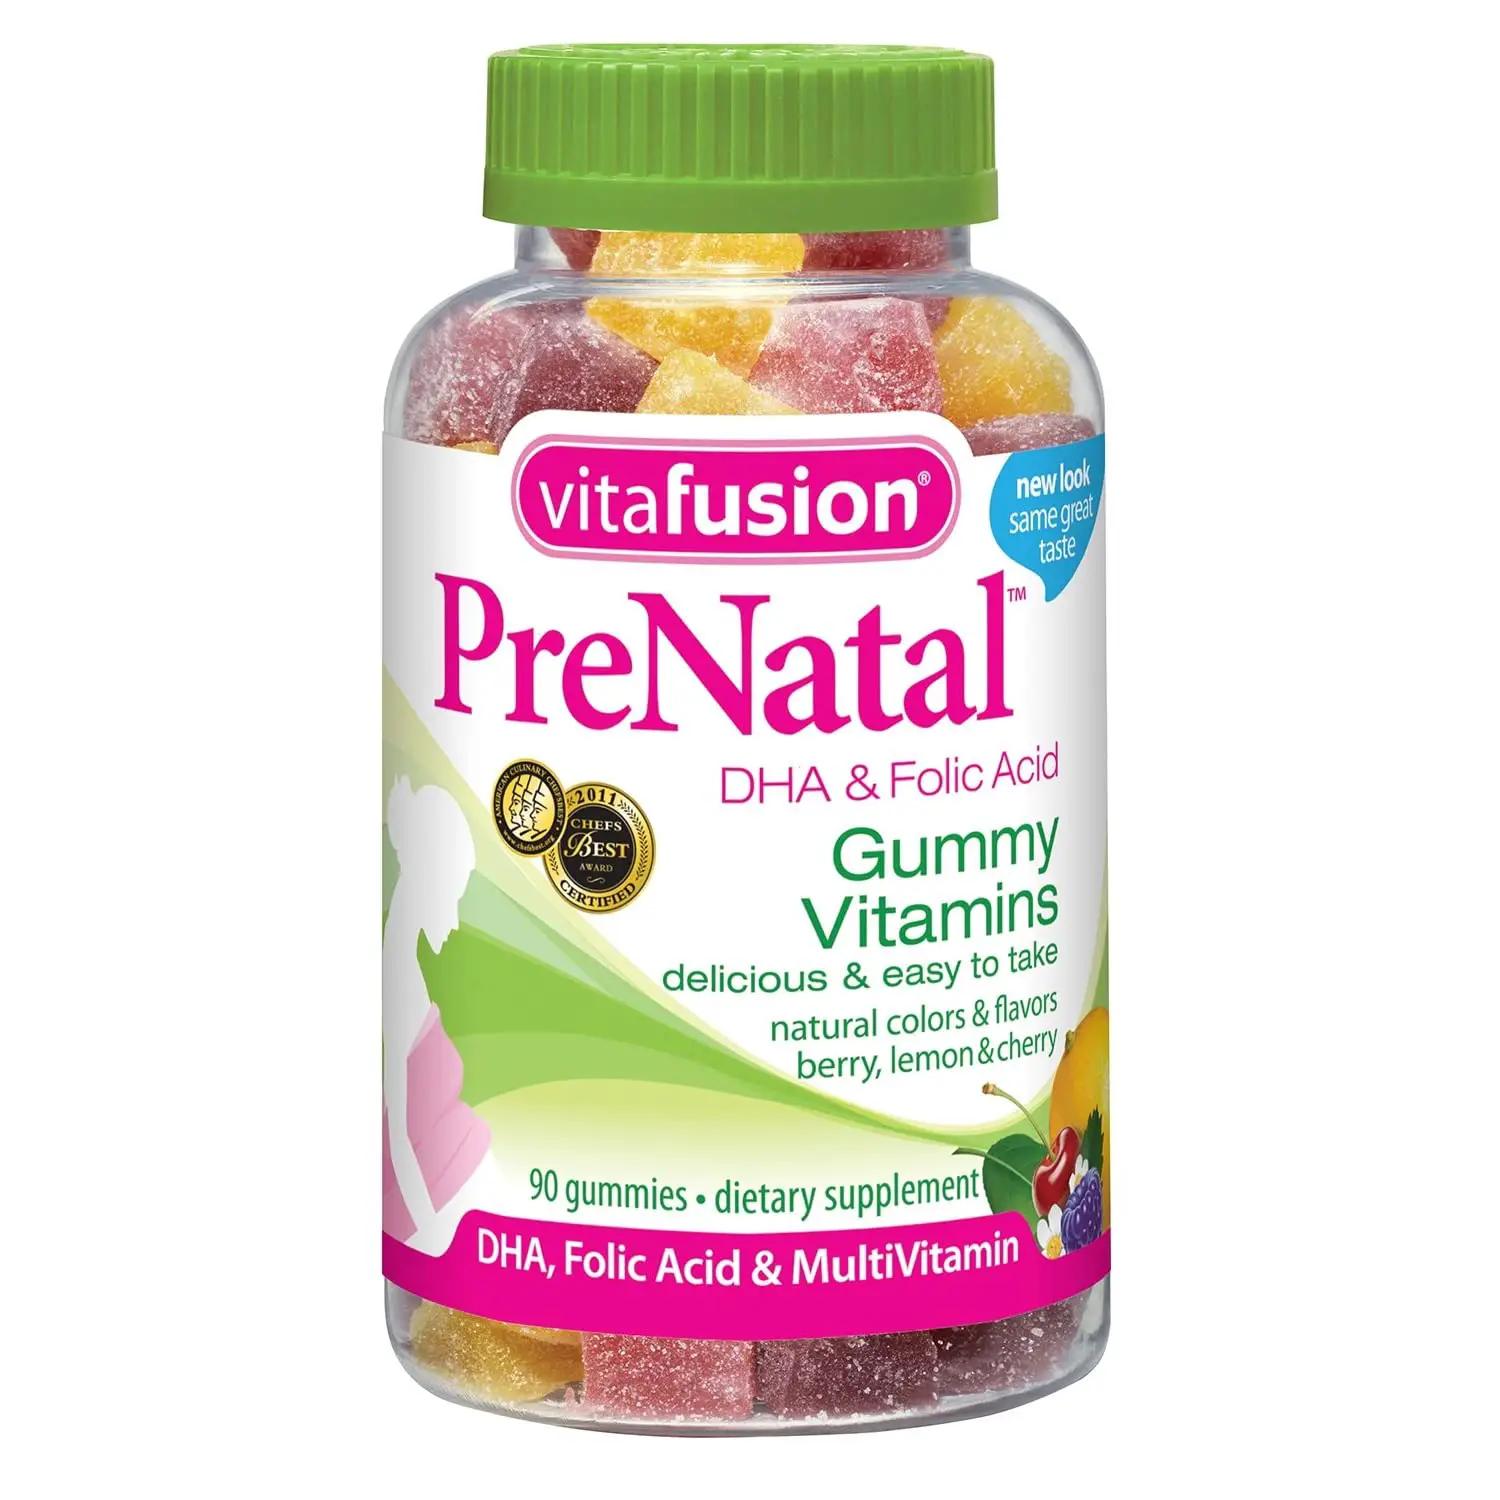 Vitafusion Prenatal, Gummy Vitamins?